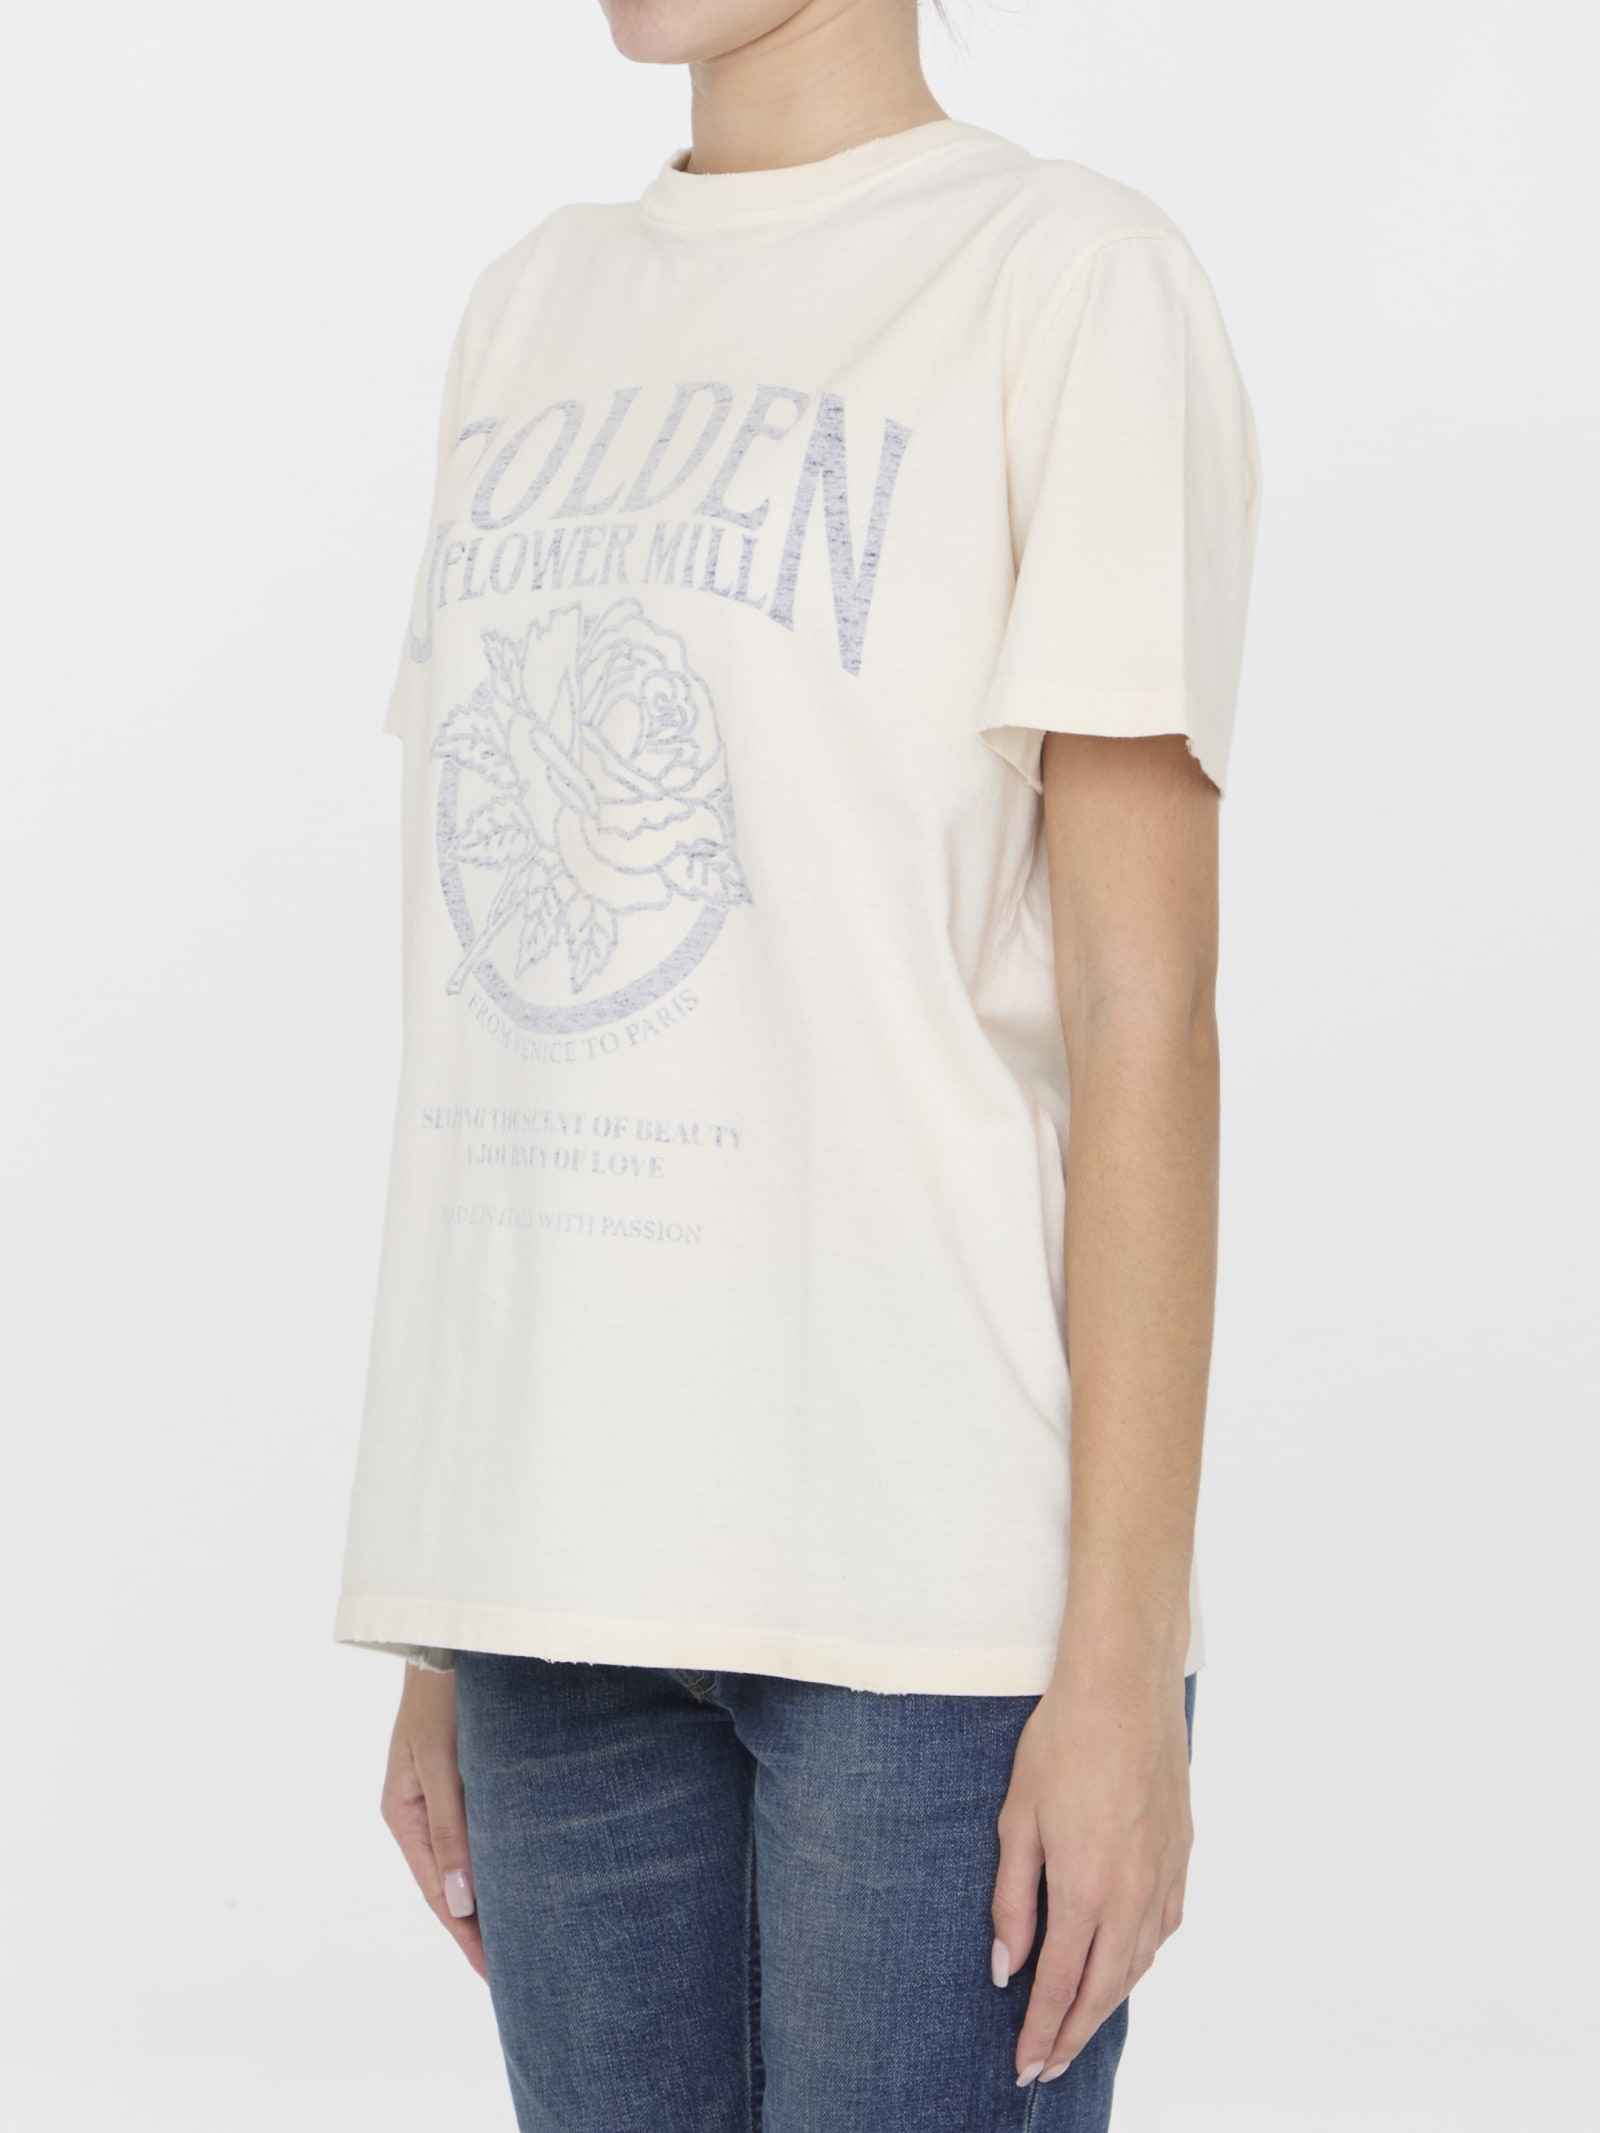 Shop Golden Goose Printed T-shirt In Cream